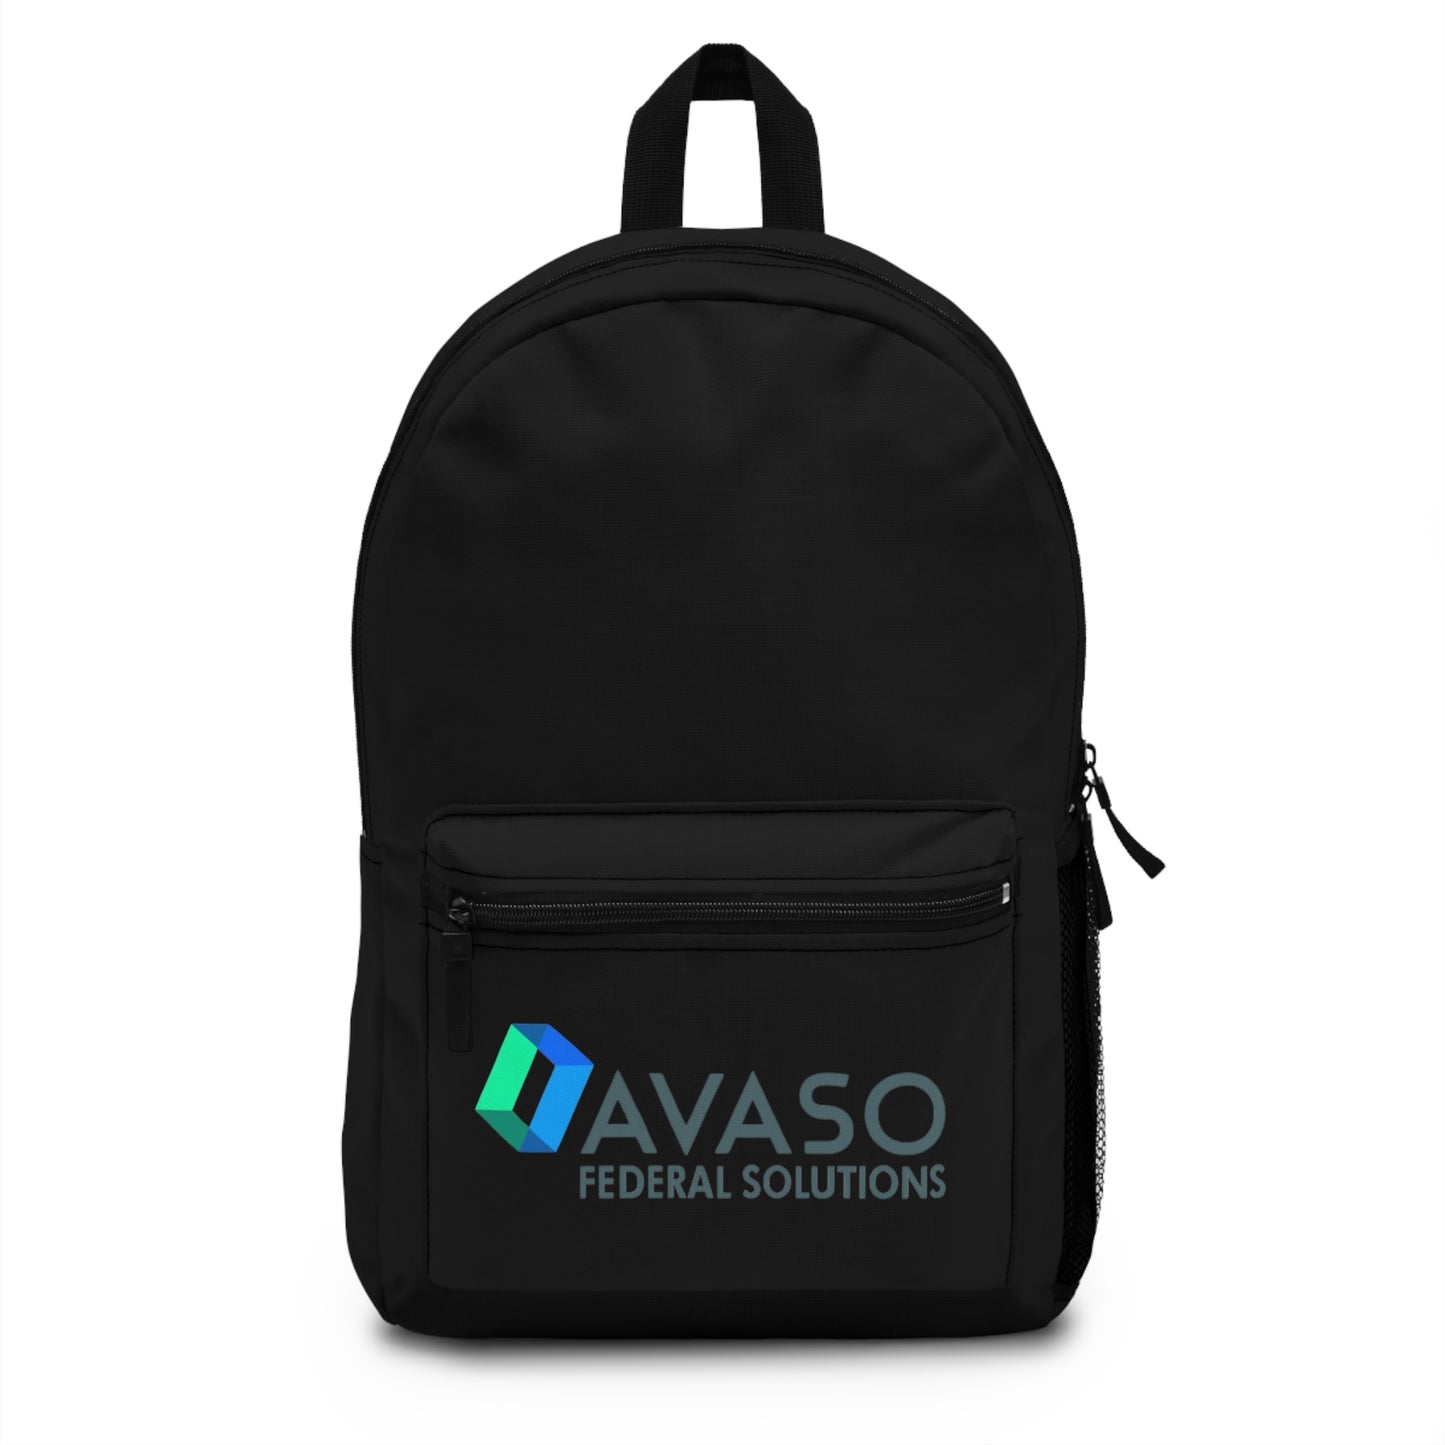 AVASO FED Welcome Backpack